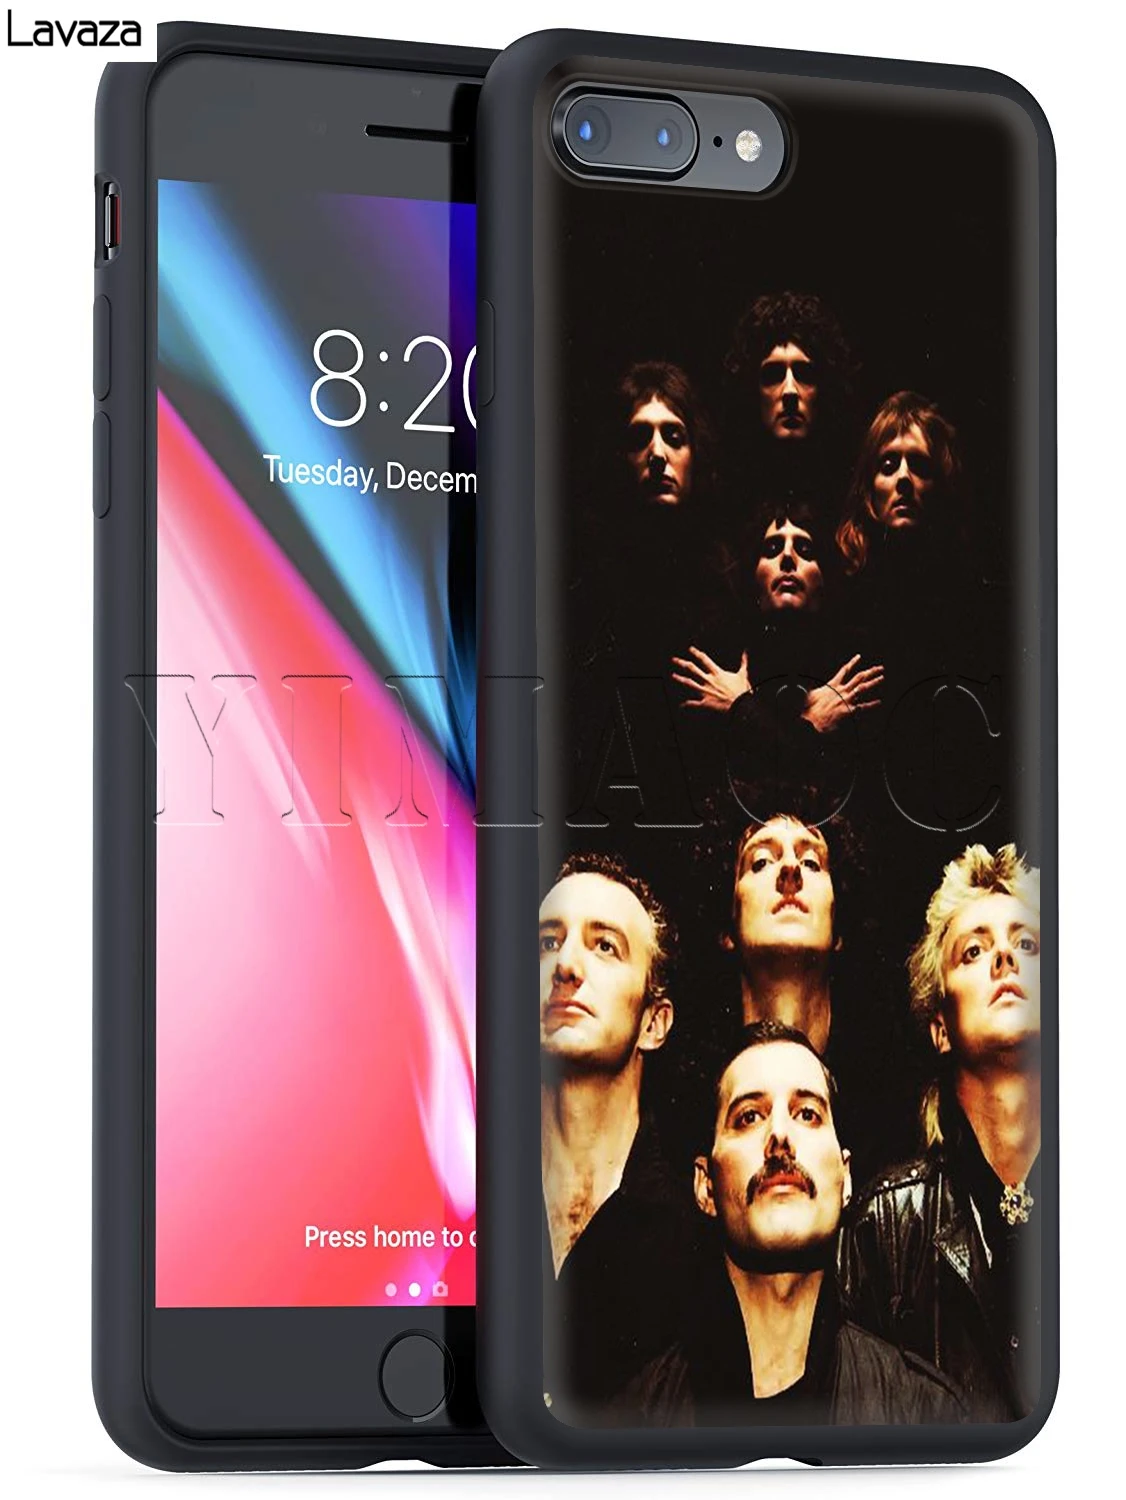 Lavaza Queen Rock Group чехол для iPhone 11 Pro XS Max XR X 8 7 6 6S Plus 5 5s se |